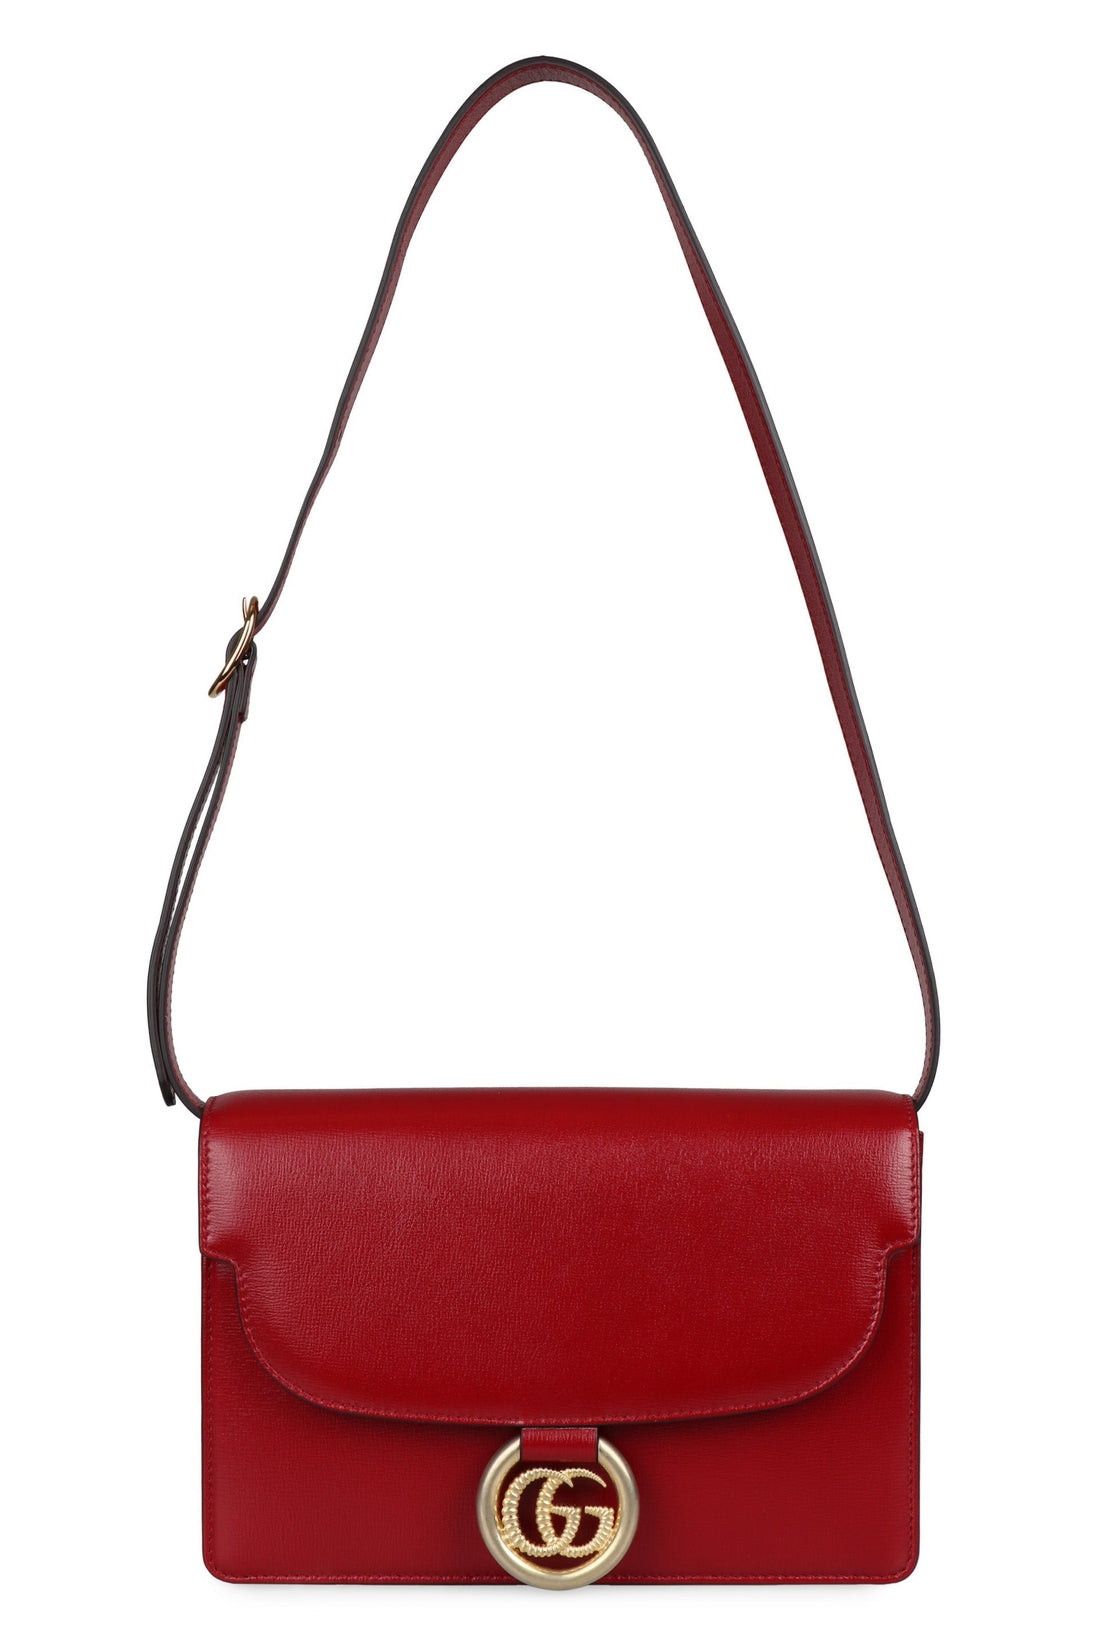 Gucci-OUTLET-SALE-GG Ring leather mini shoulder bag-ARCHIVIST